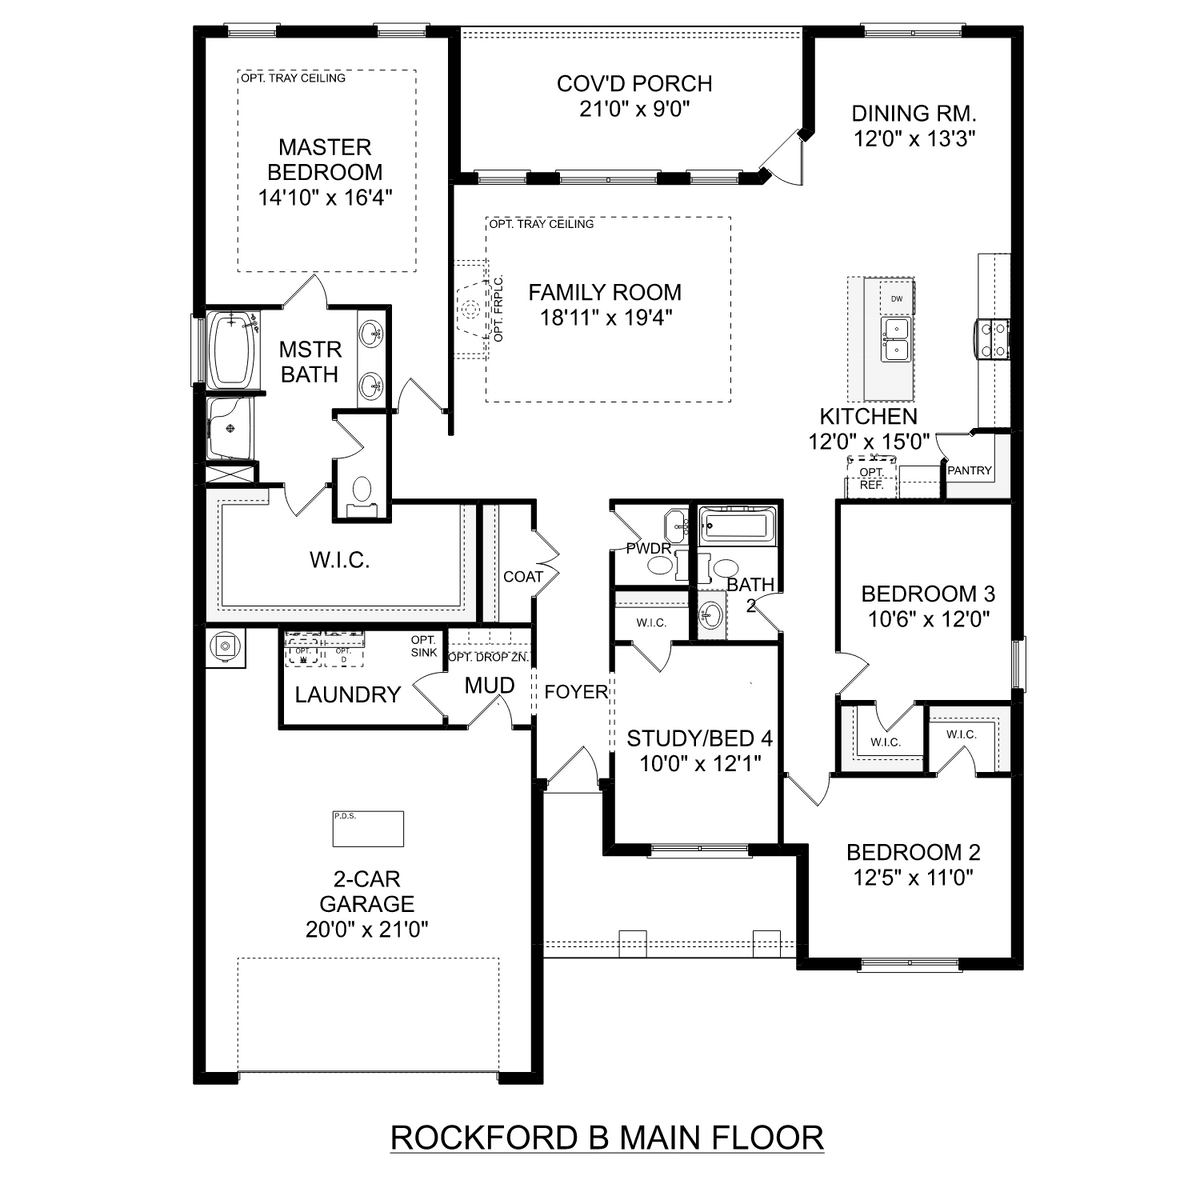 1 - The Rockford B floor plan layout for 2104 Brandon Dr in Davidson Homes' North Ridge community.